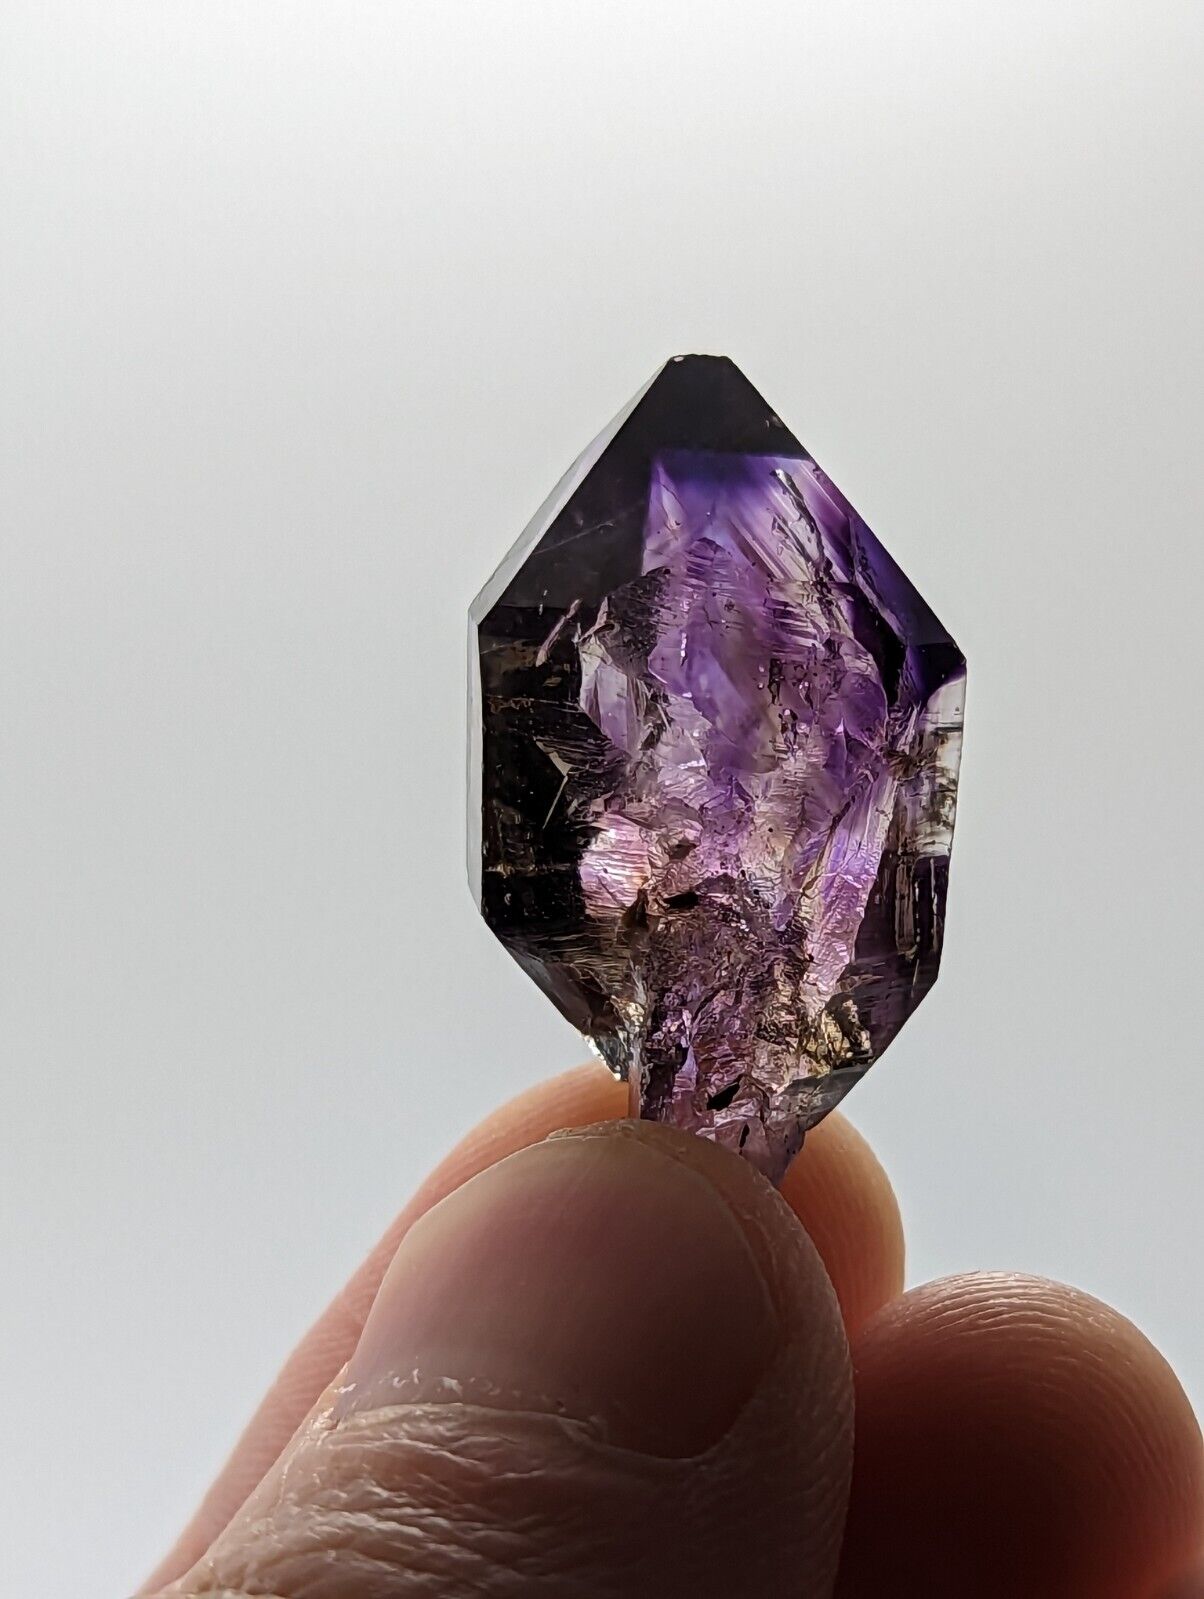 Shangaan Smoky Amethyst Enhydro Scepter Quartz Crystal , Chimbuku Mine, Zimbabwe